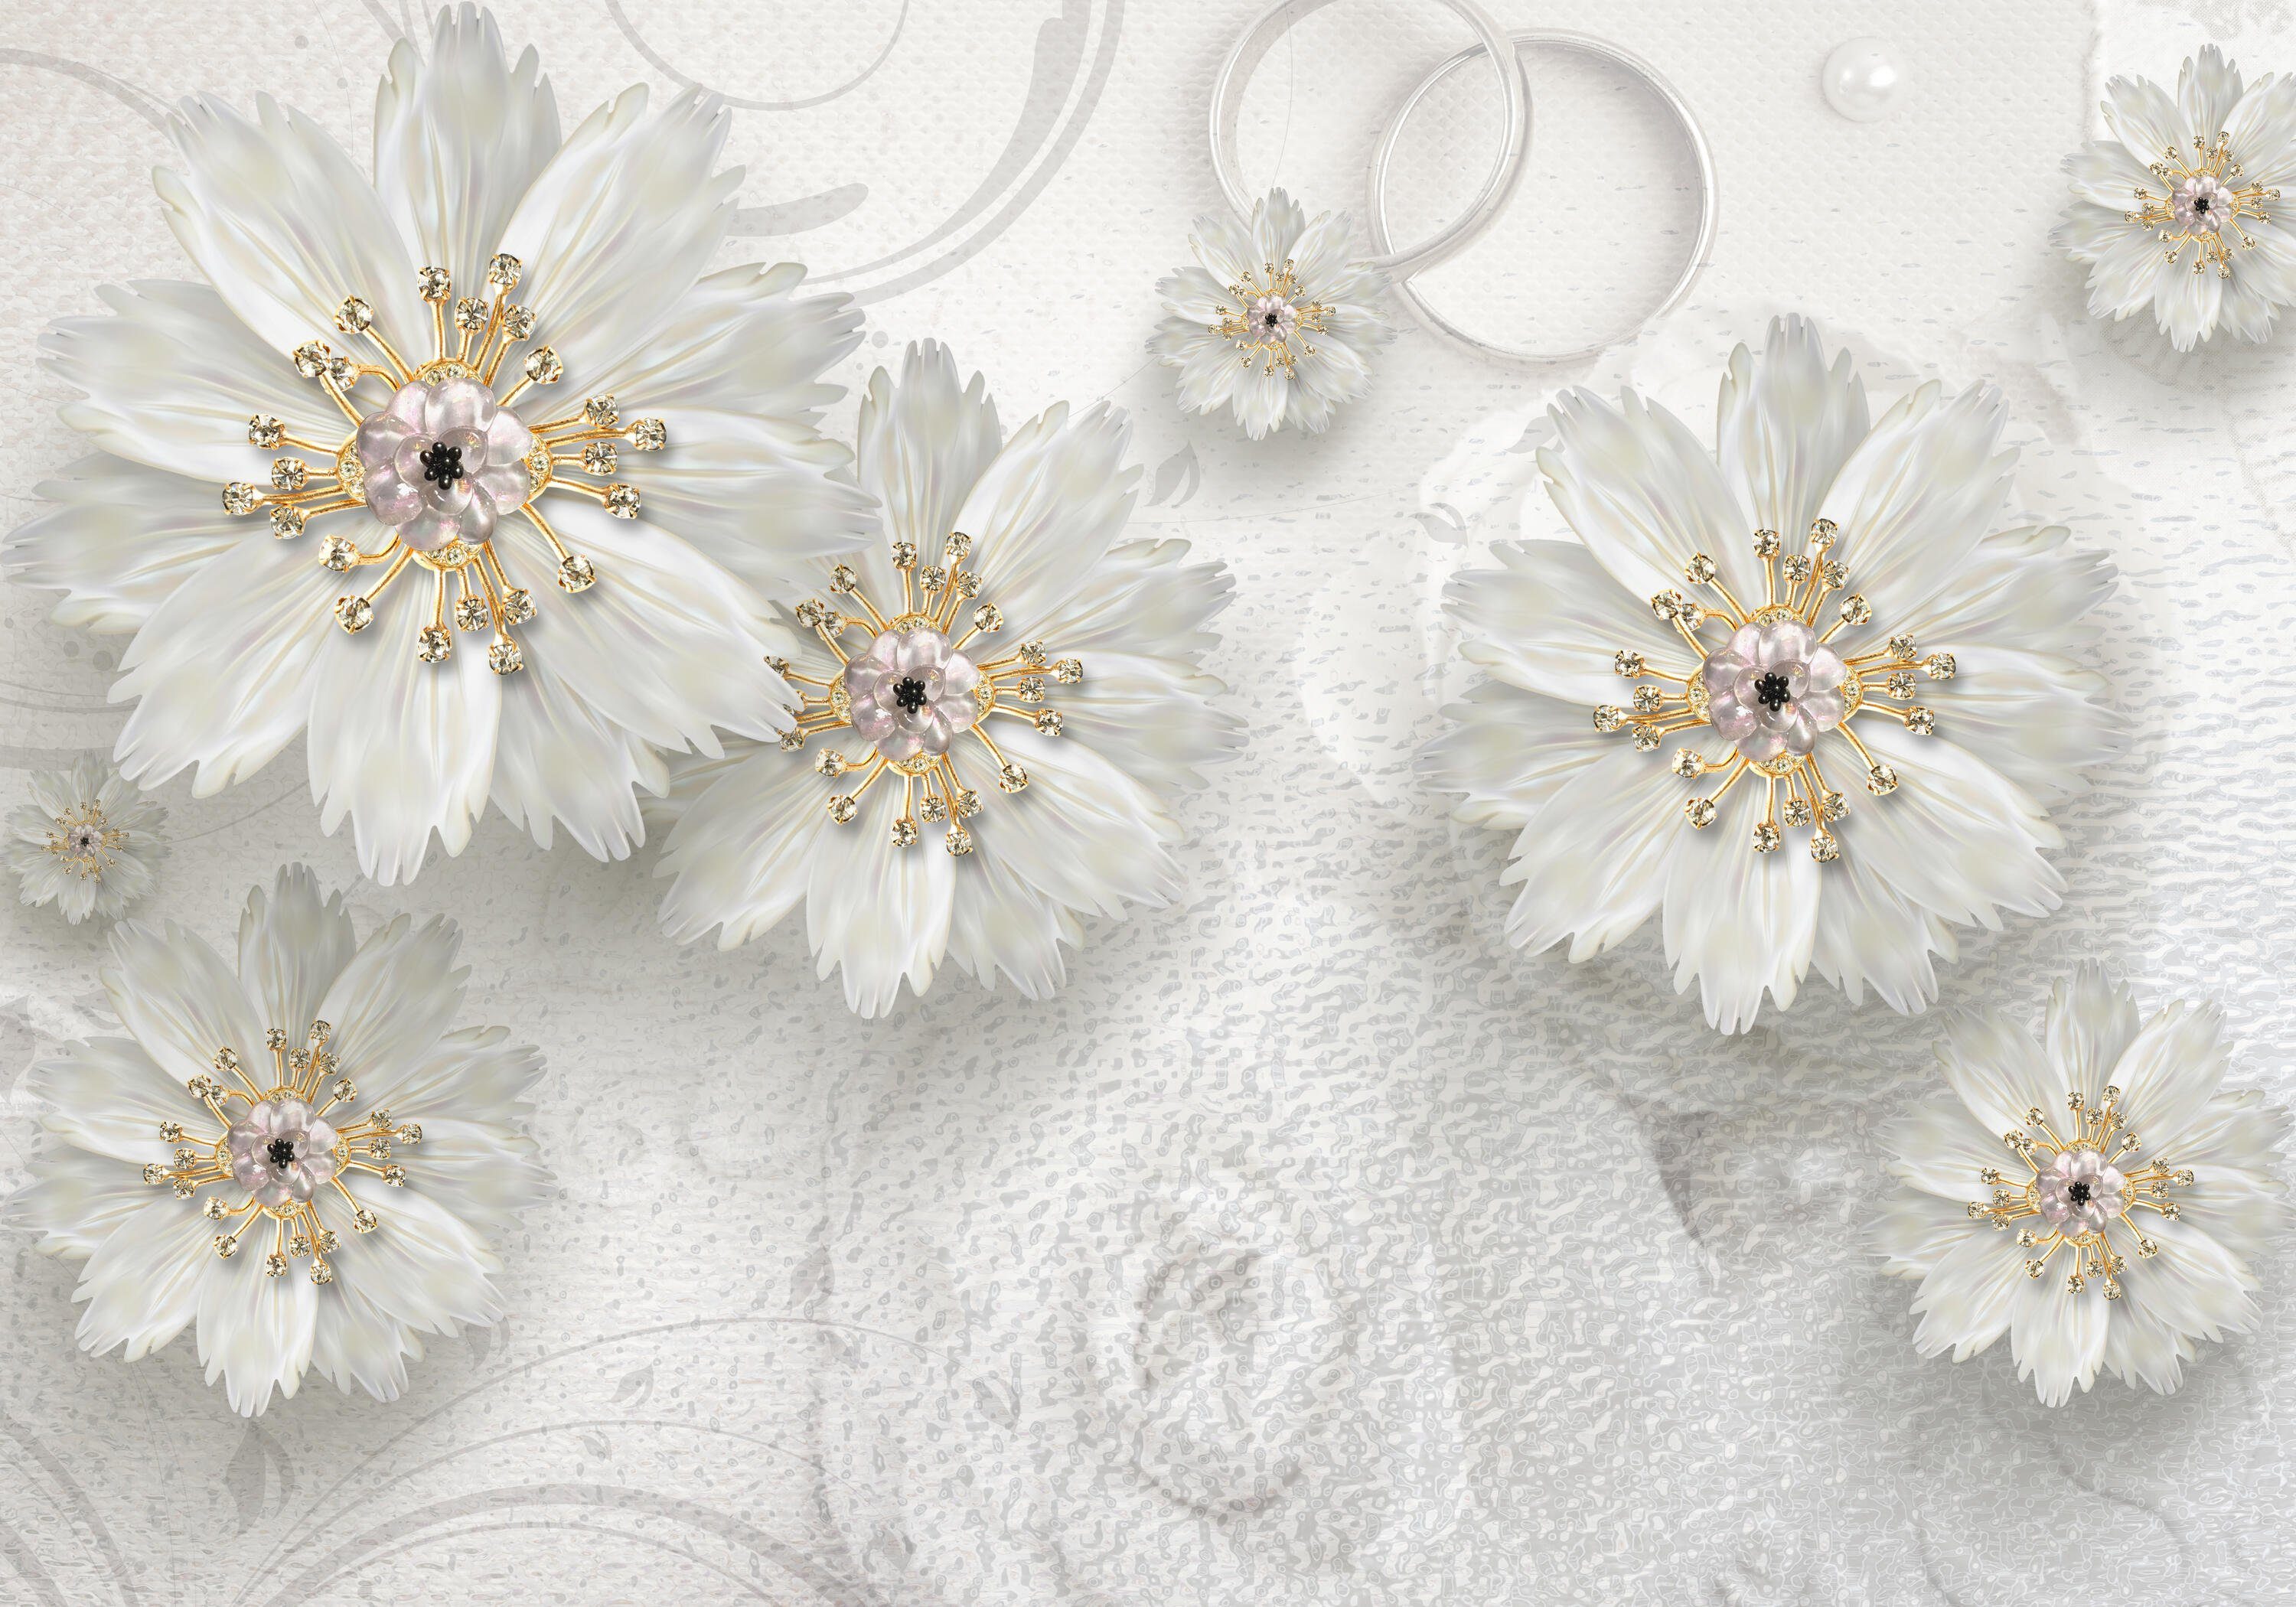 Fototapete matt, wandmotiv24 weiße Ornamente 3D Motivtapete, Vliestapete Wandtapete, Effekt, Blüten glatt,